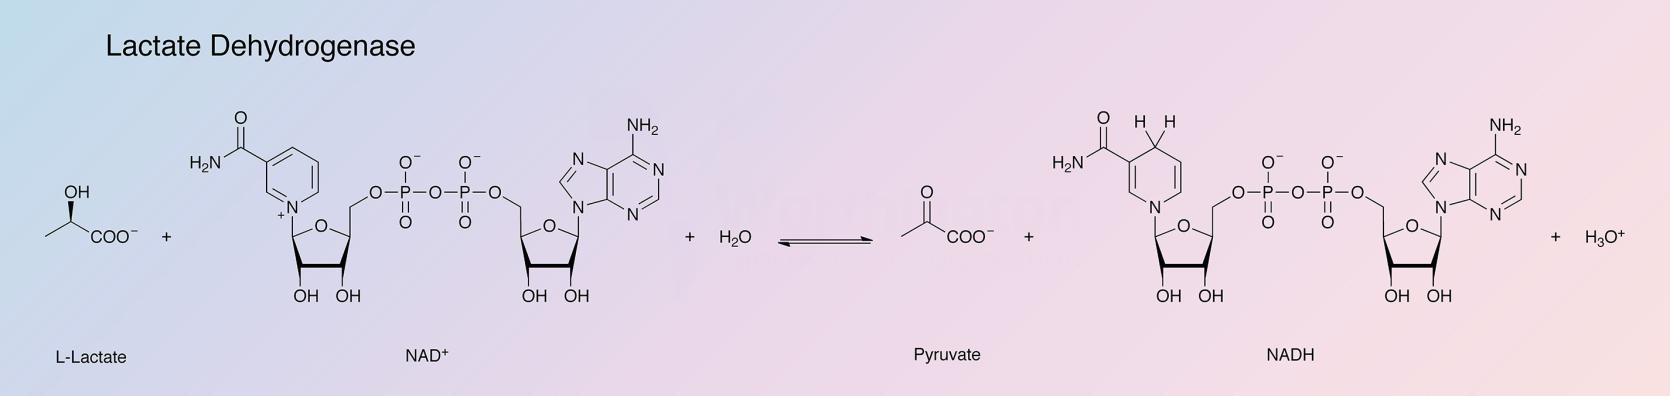 Lactate Dehydrogenase Enzymatic Reaction